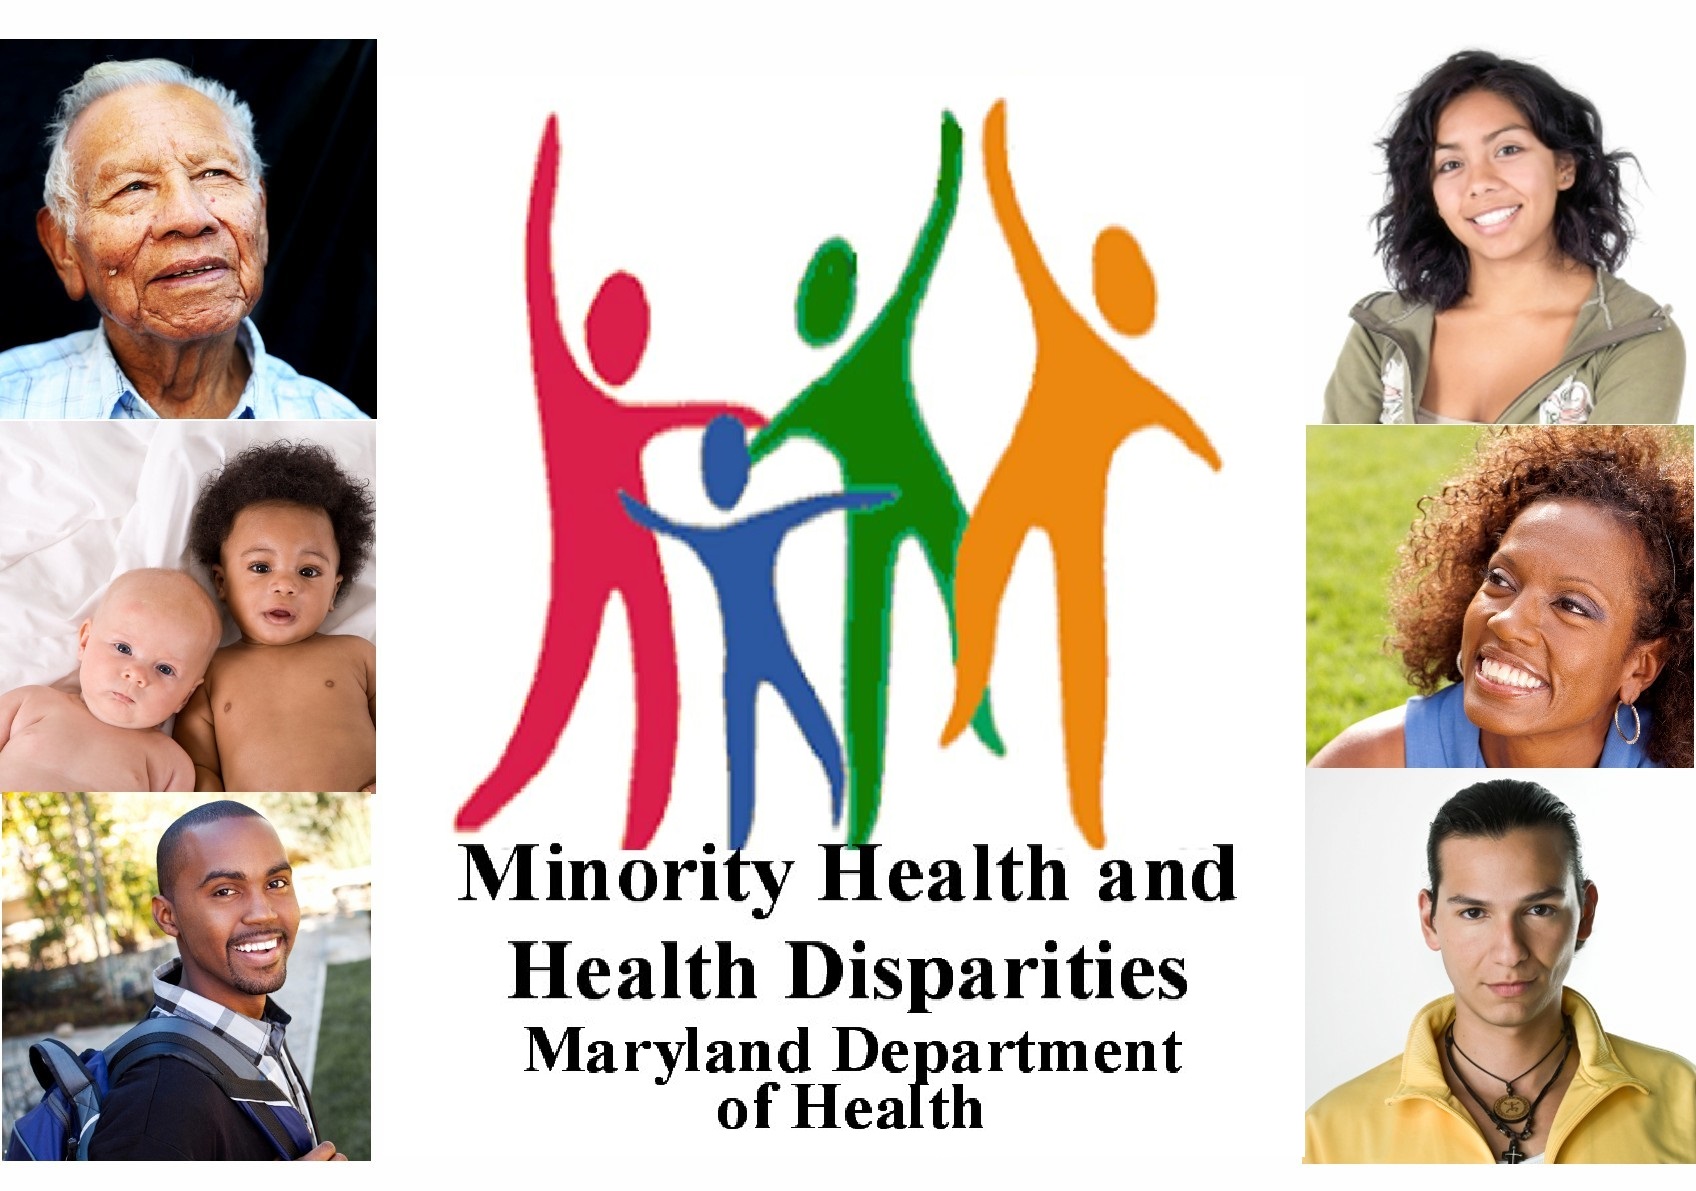 Minority Health and Health Disparities MD Department of Health